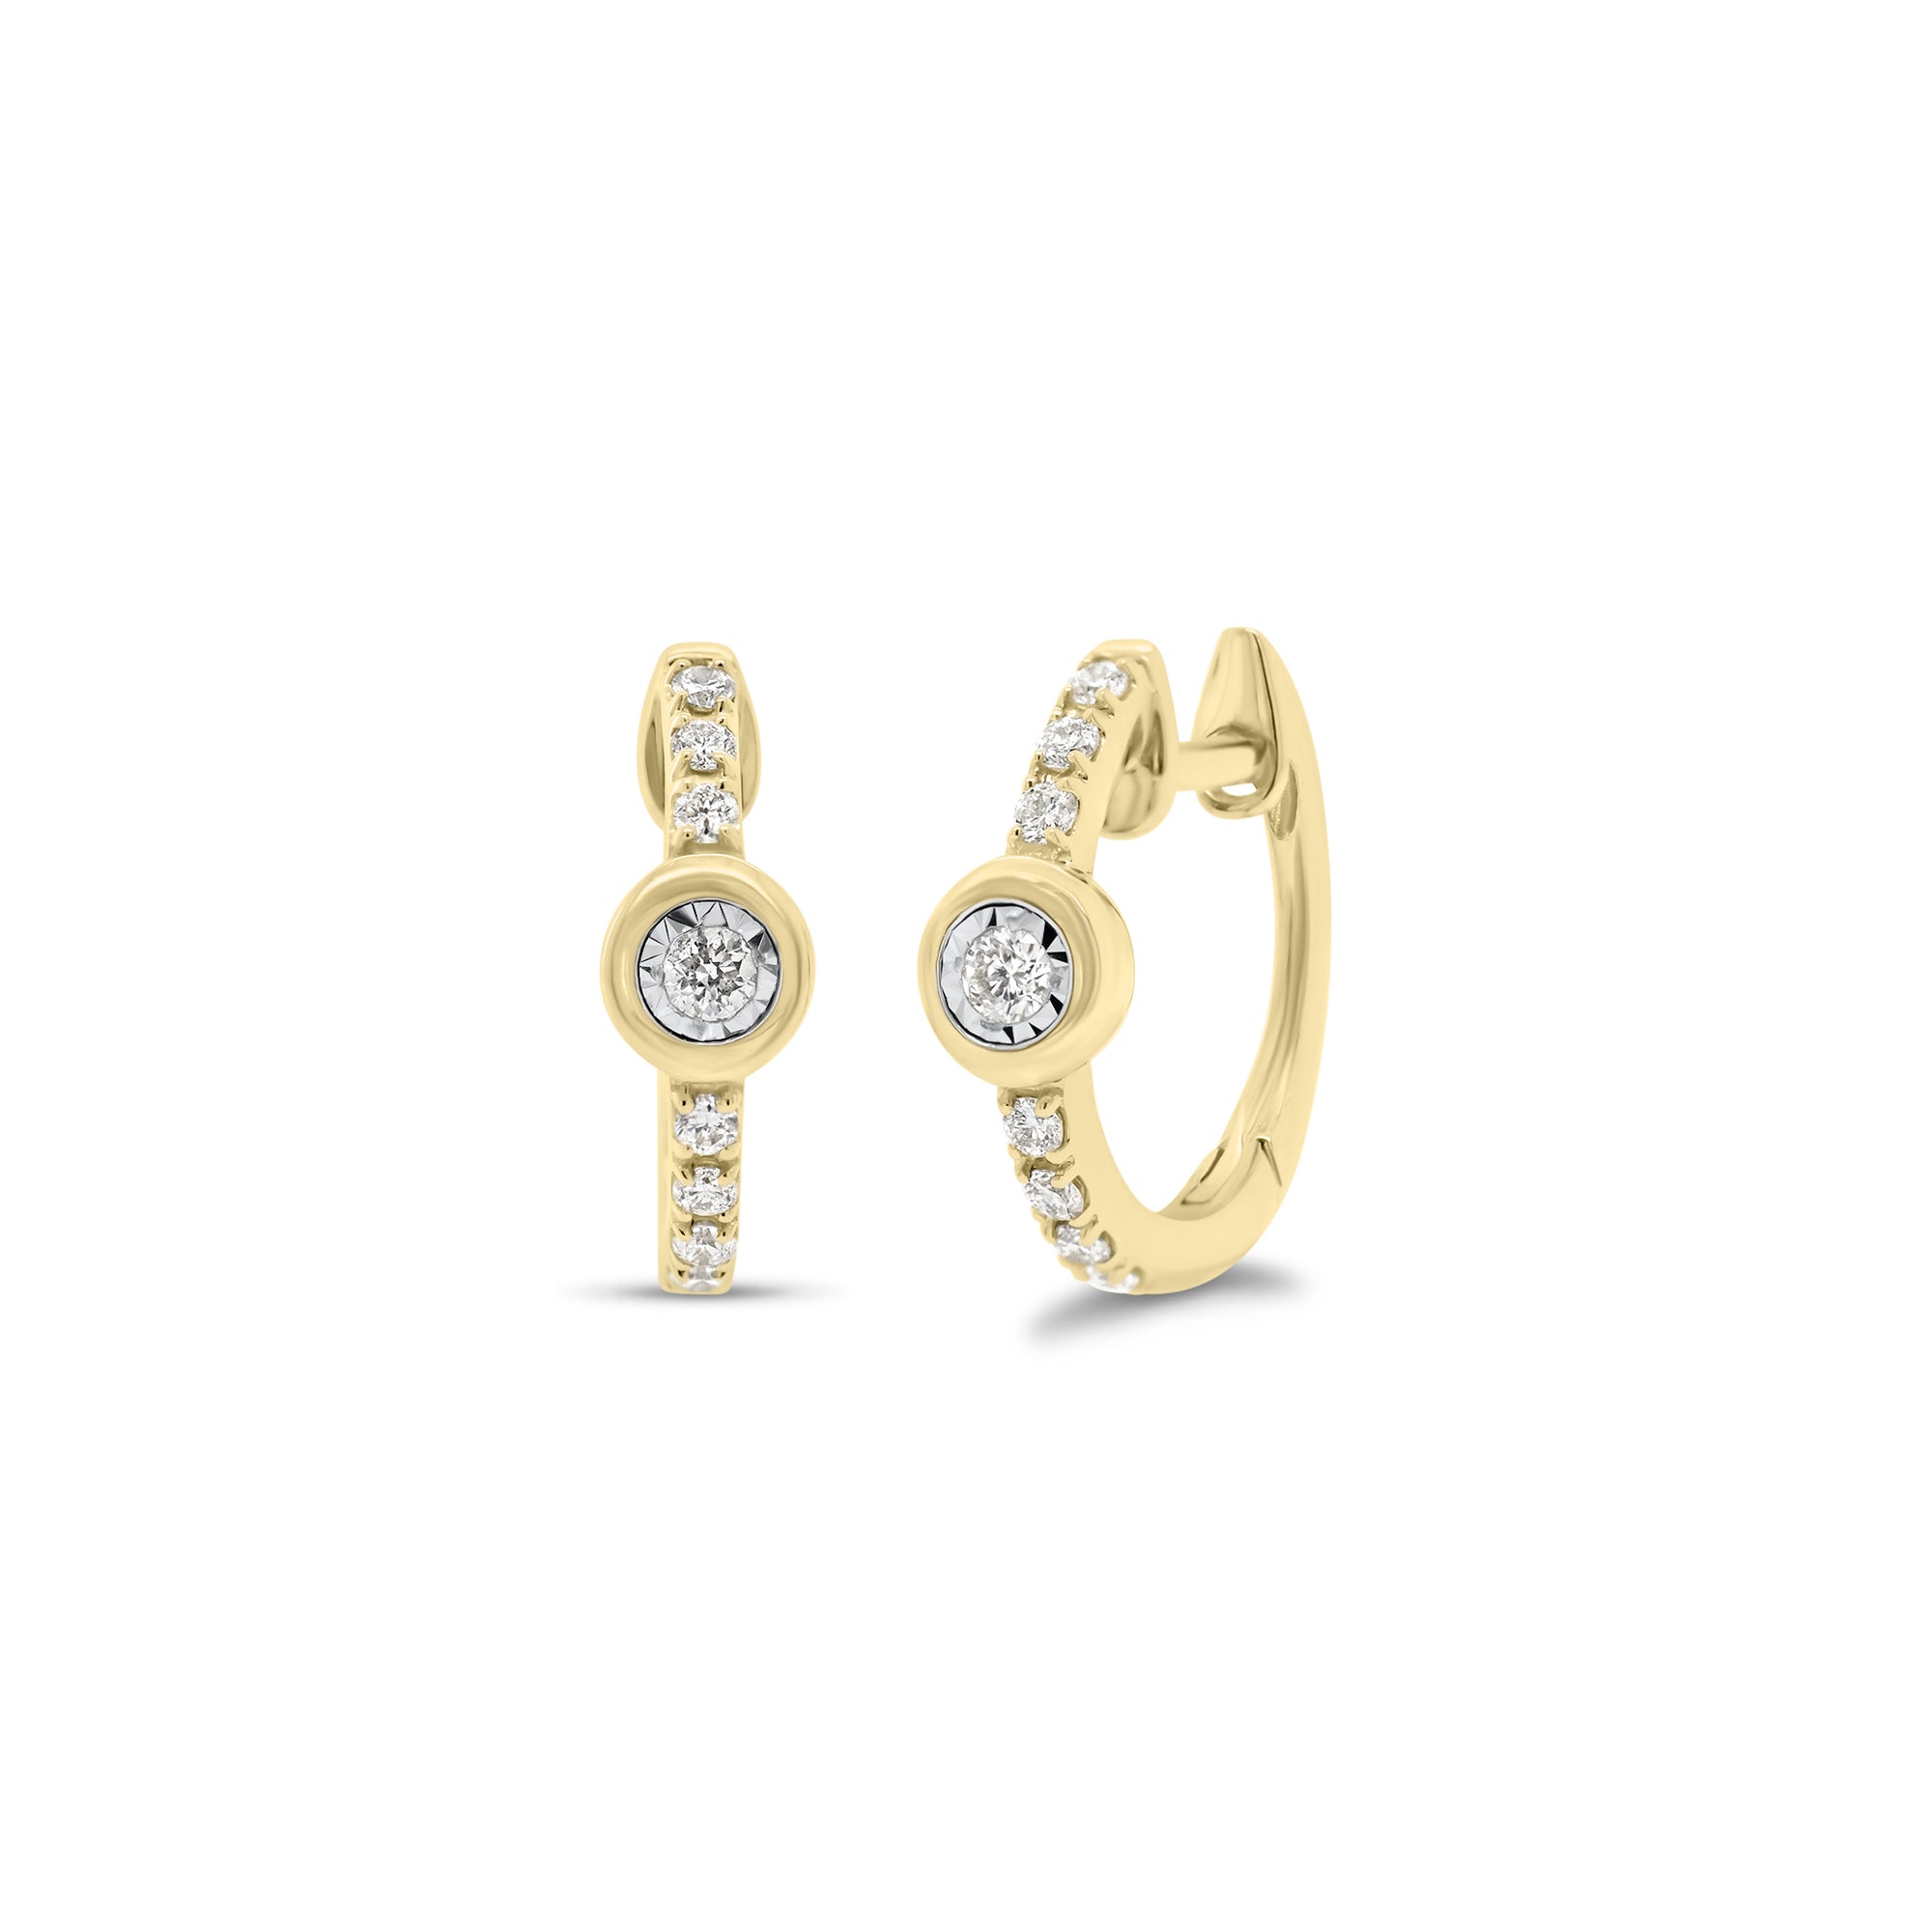 Bezel-Set Diamond Huggie Earrings - 14K gold weighing 2.07 grams  - 16 round diamonds totaling 0.16 carats